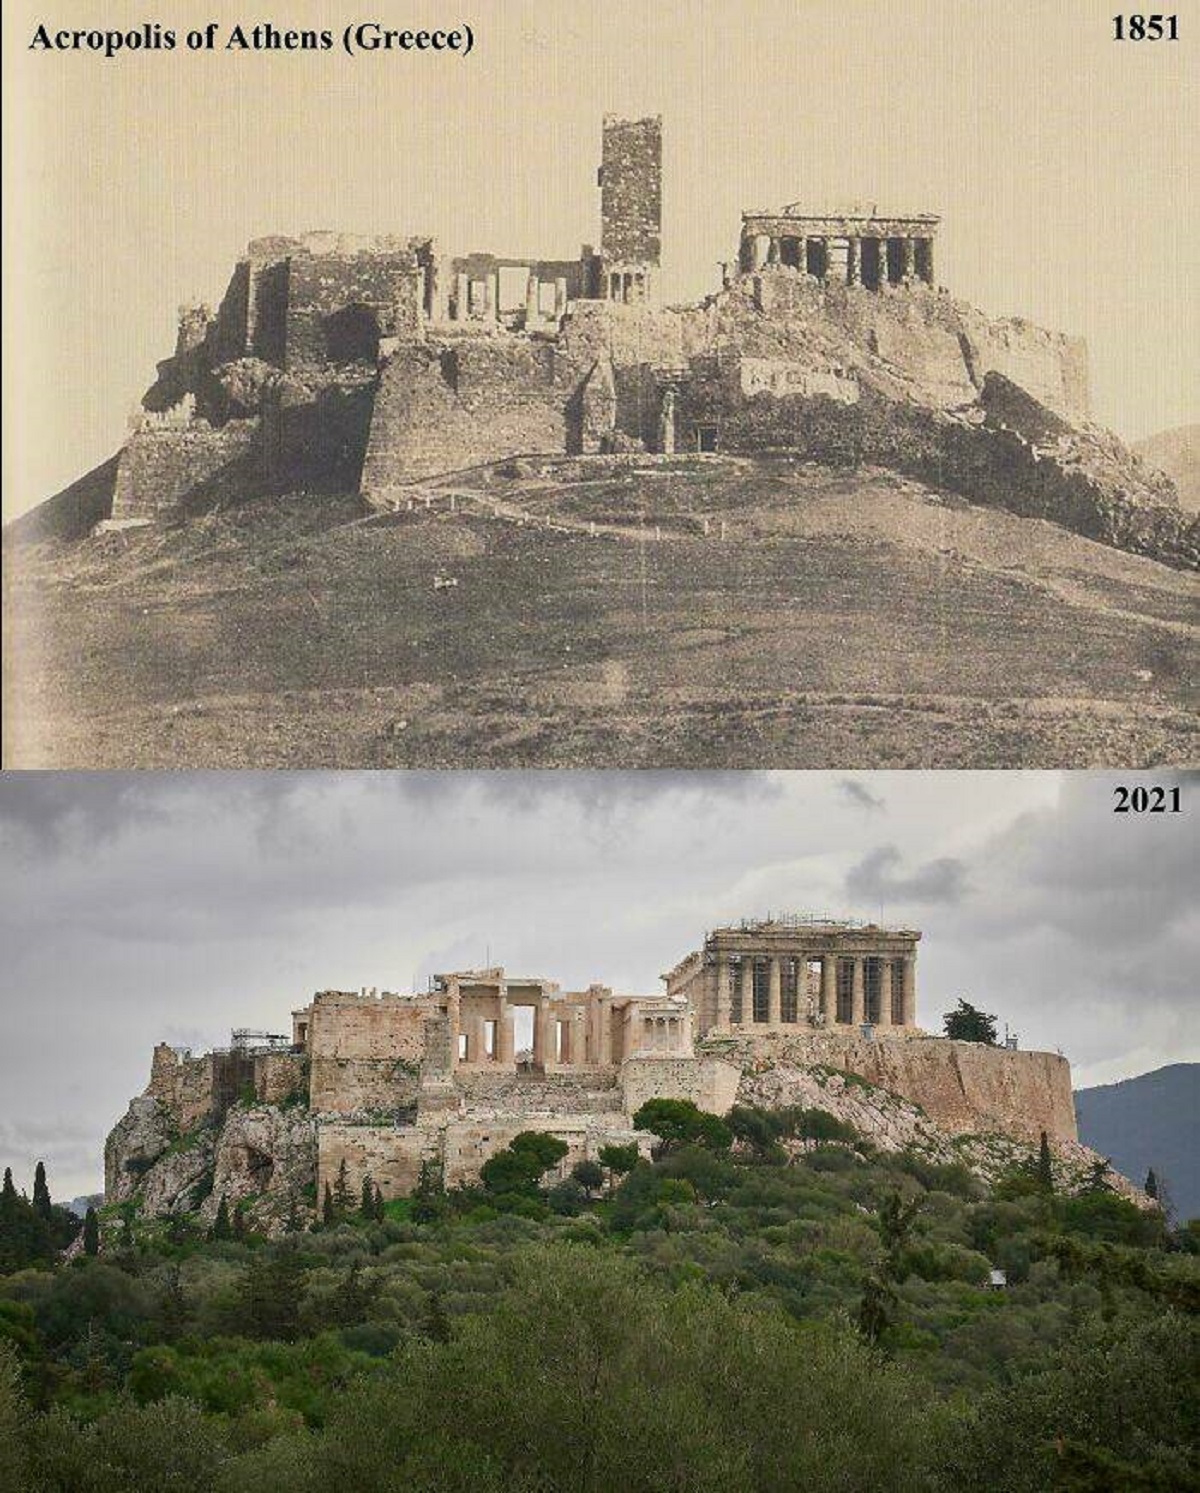 "Acropolis Of Athens (Greece) 1851 vs. 2021"